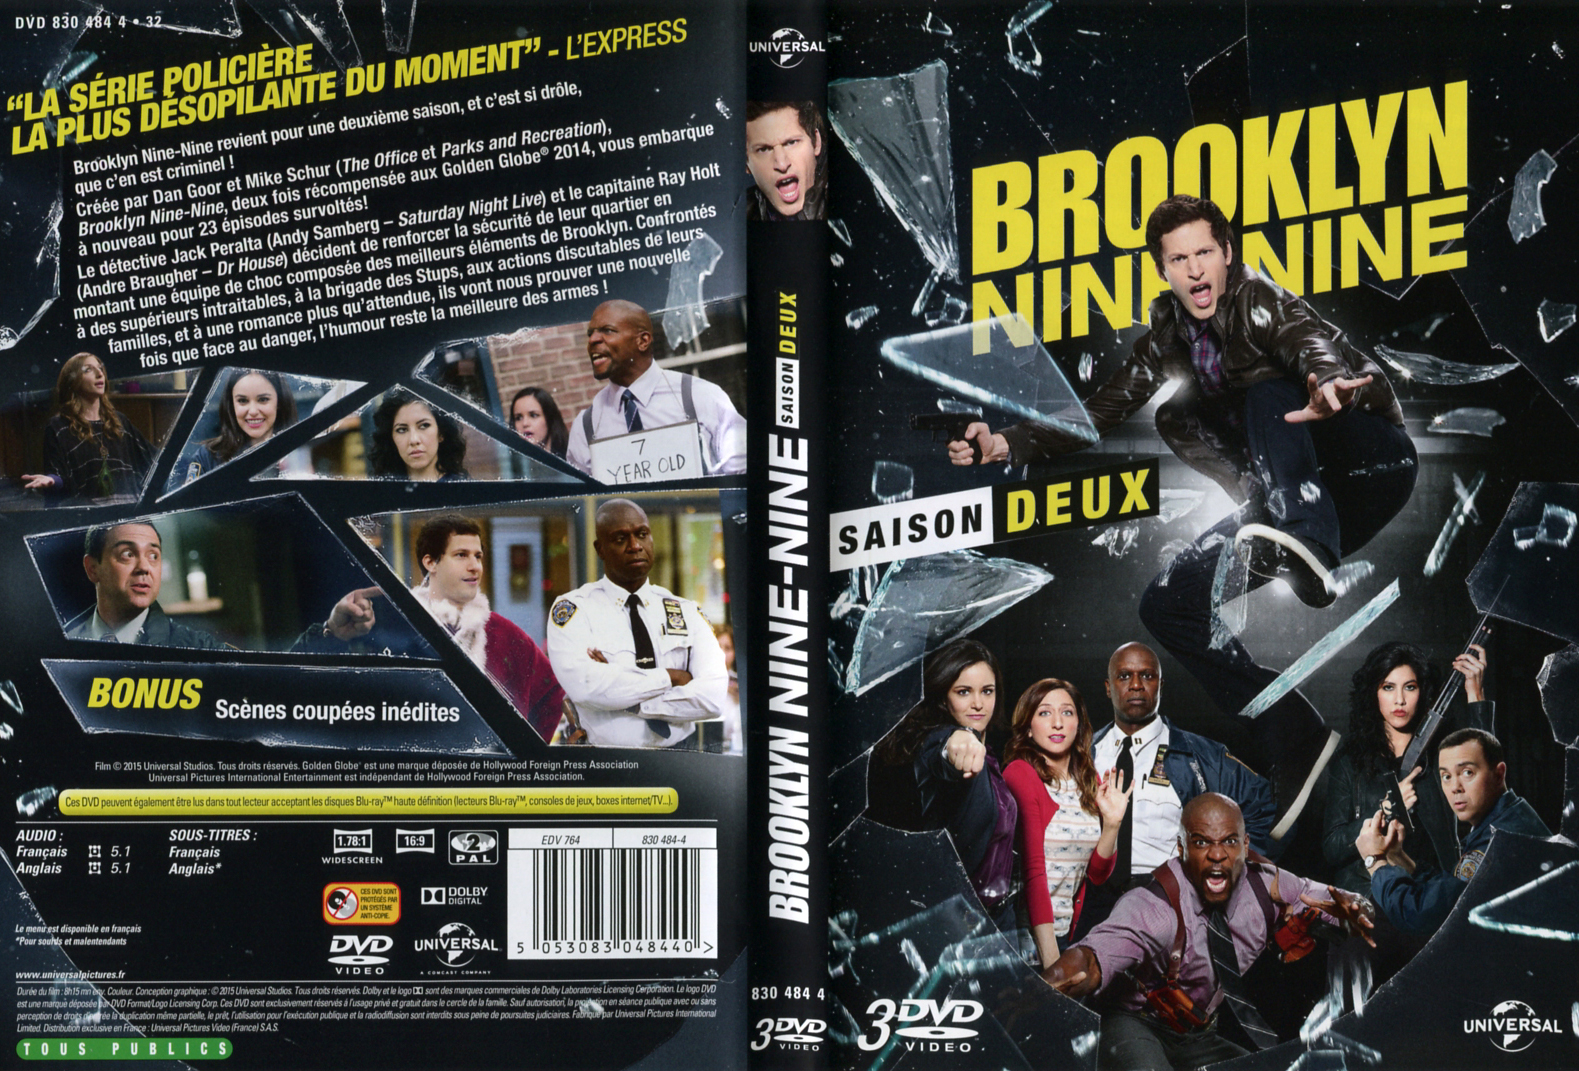 Jaquette DVD Brooklyn nine-nine Saison 2